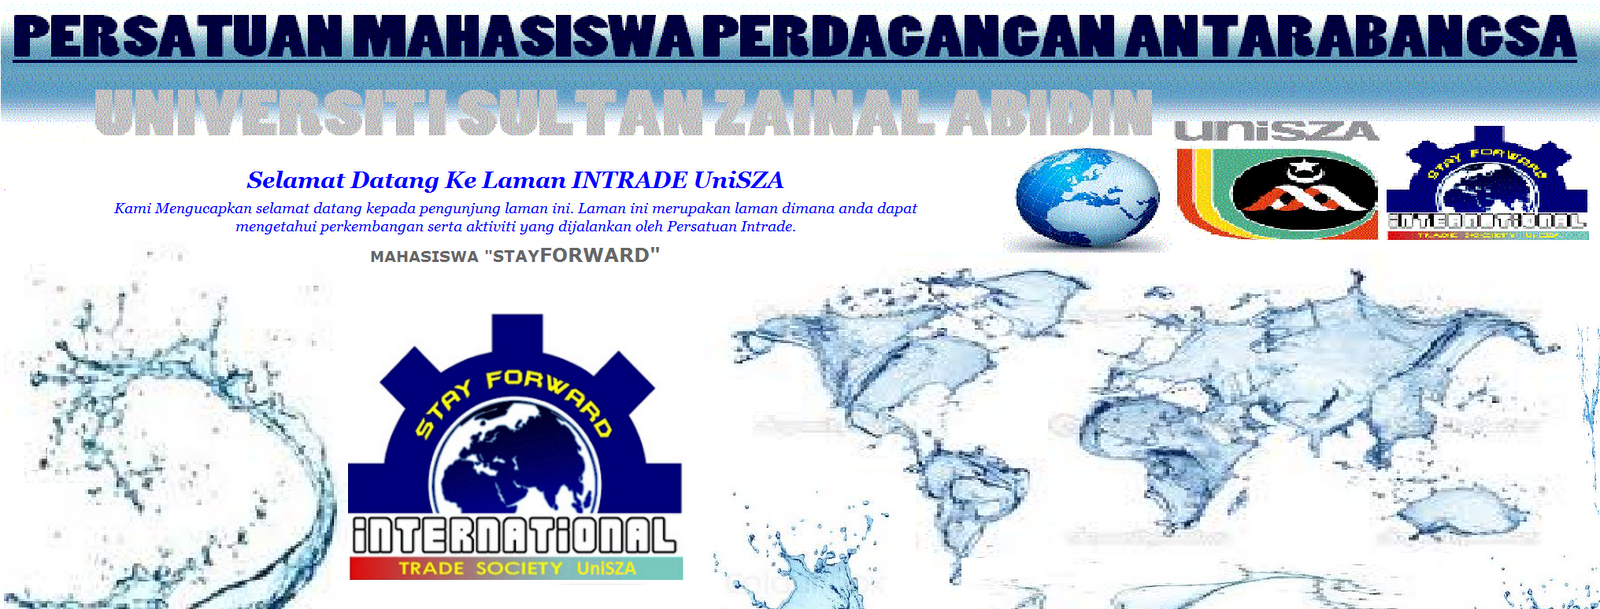 Persatuan Mahasiswa Perdagangan Antarabangsa UniSZA